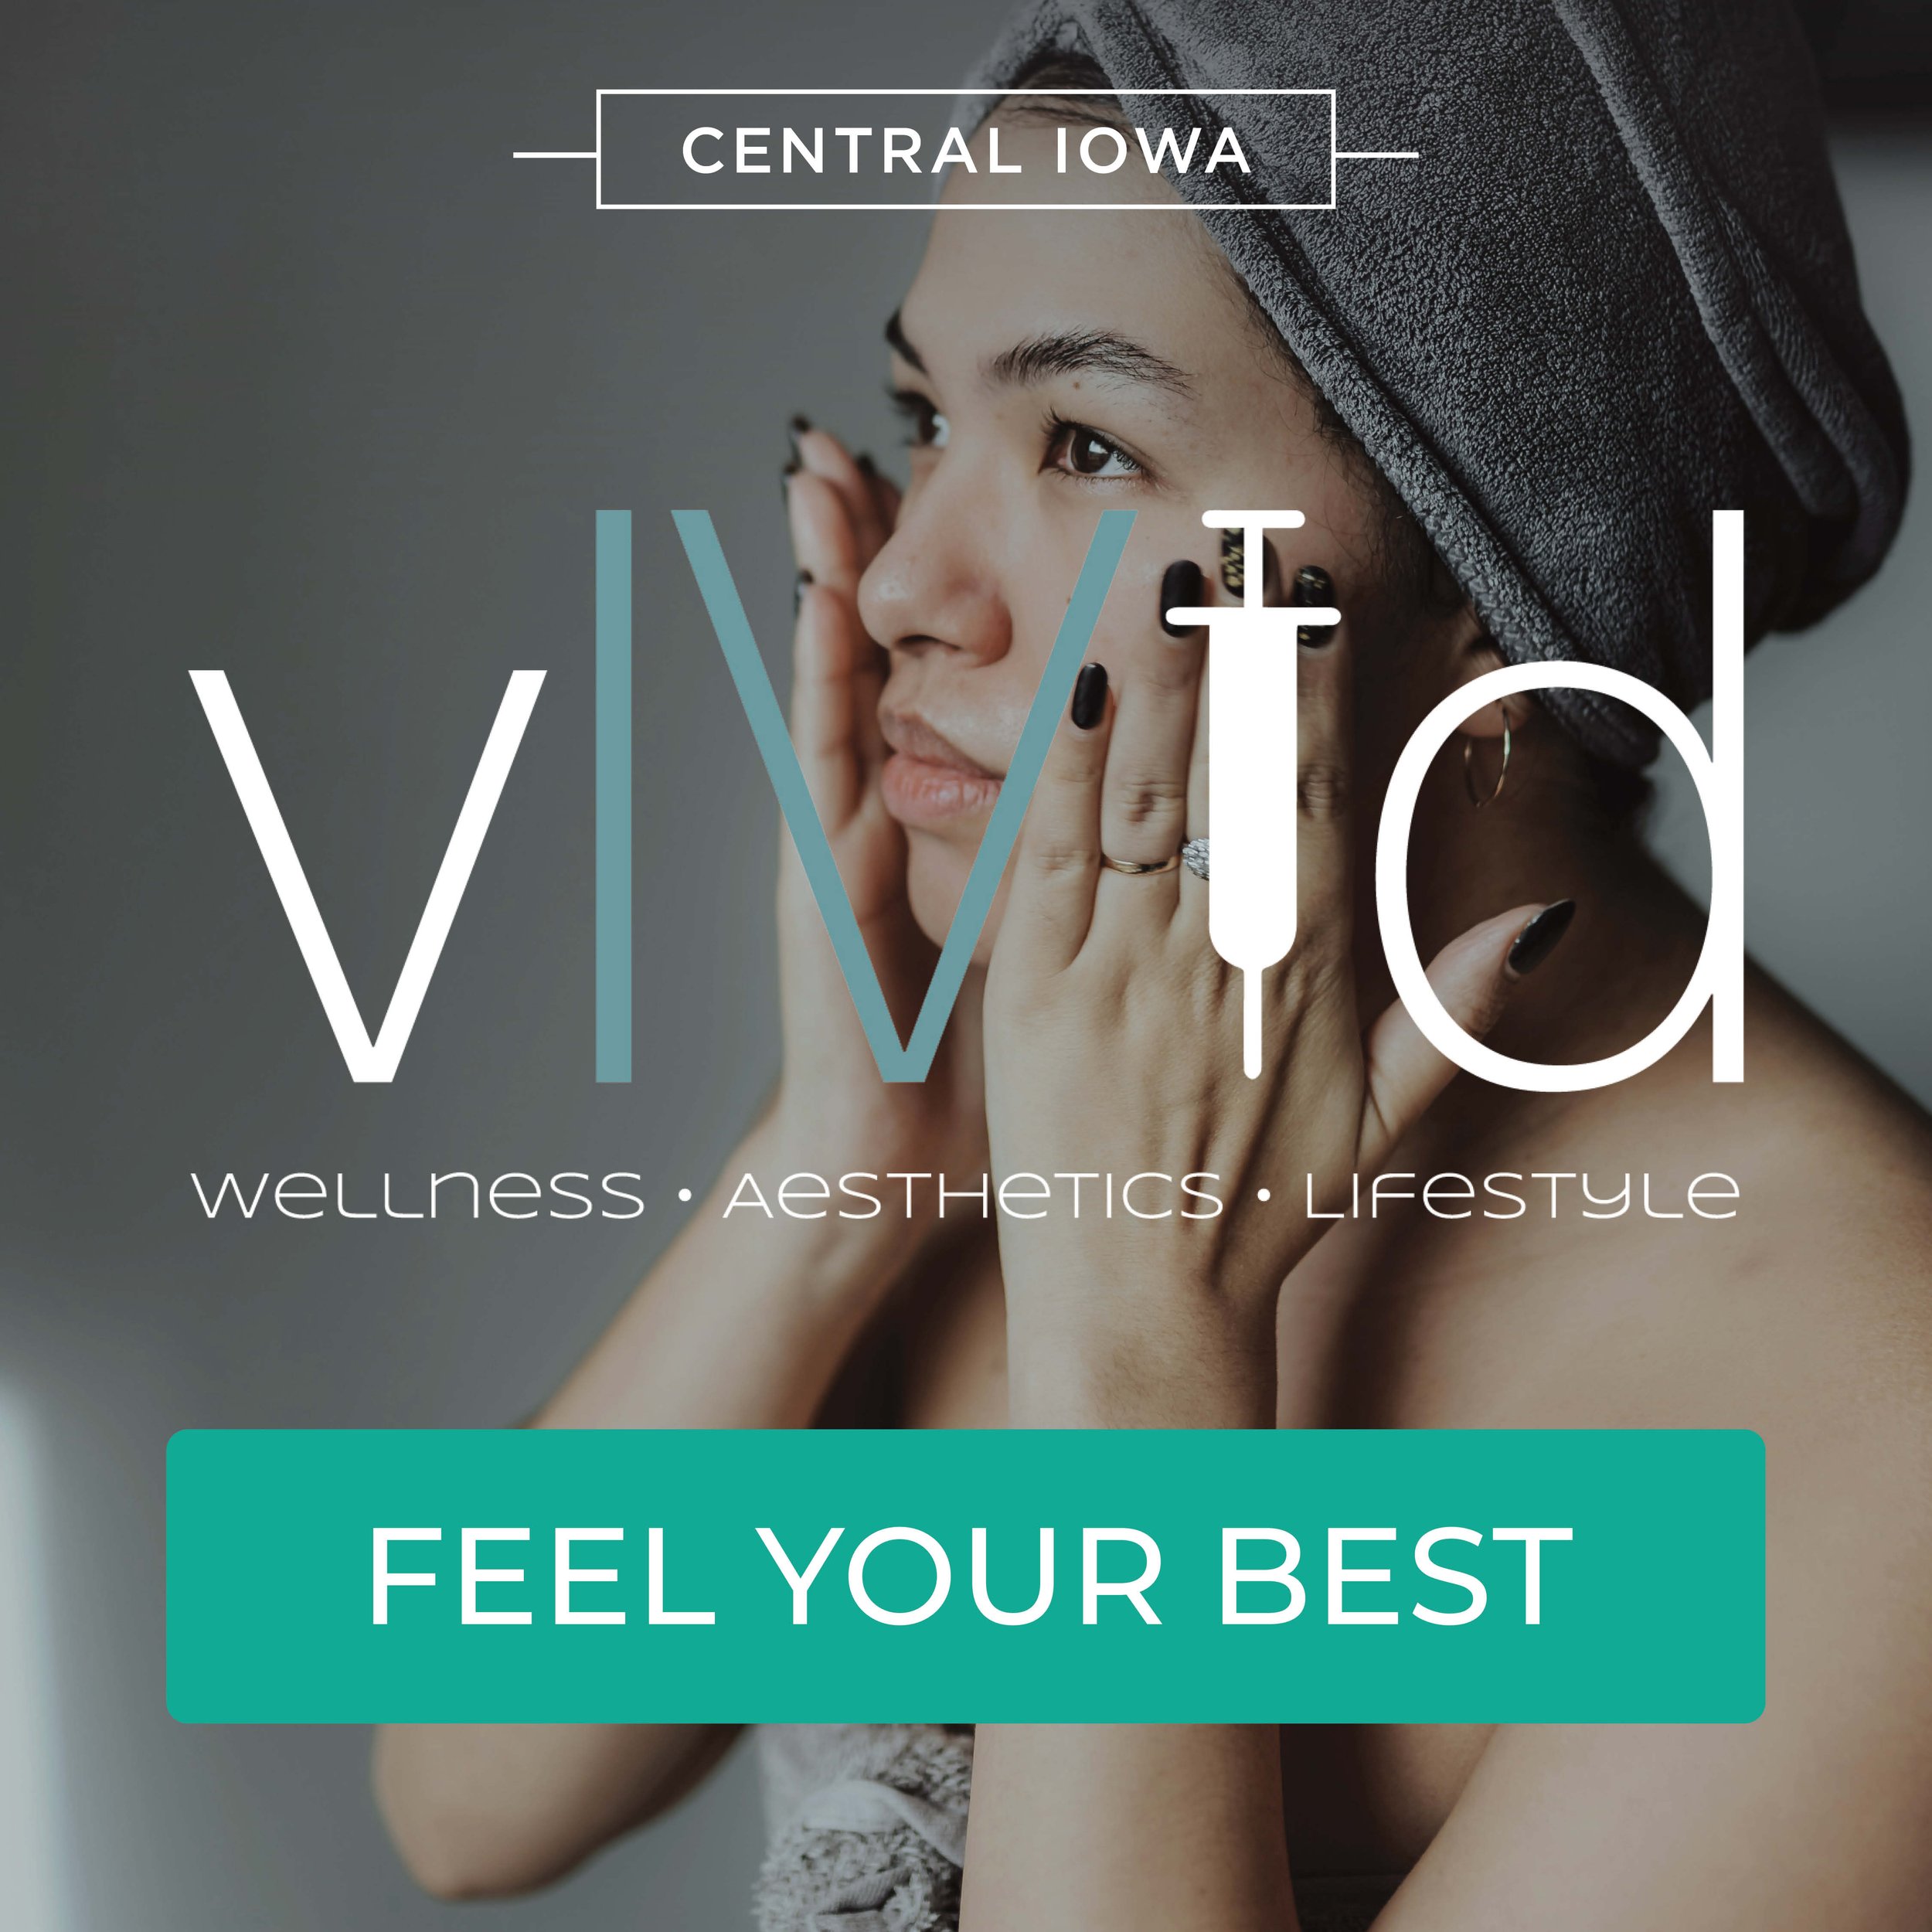 vIVid – Wellness / Aesthetics / Lifestyle